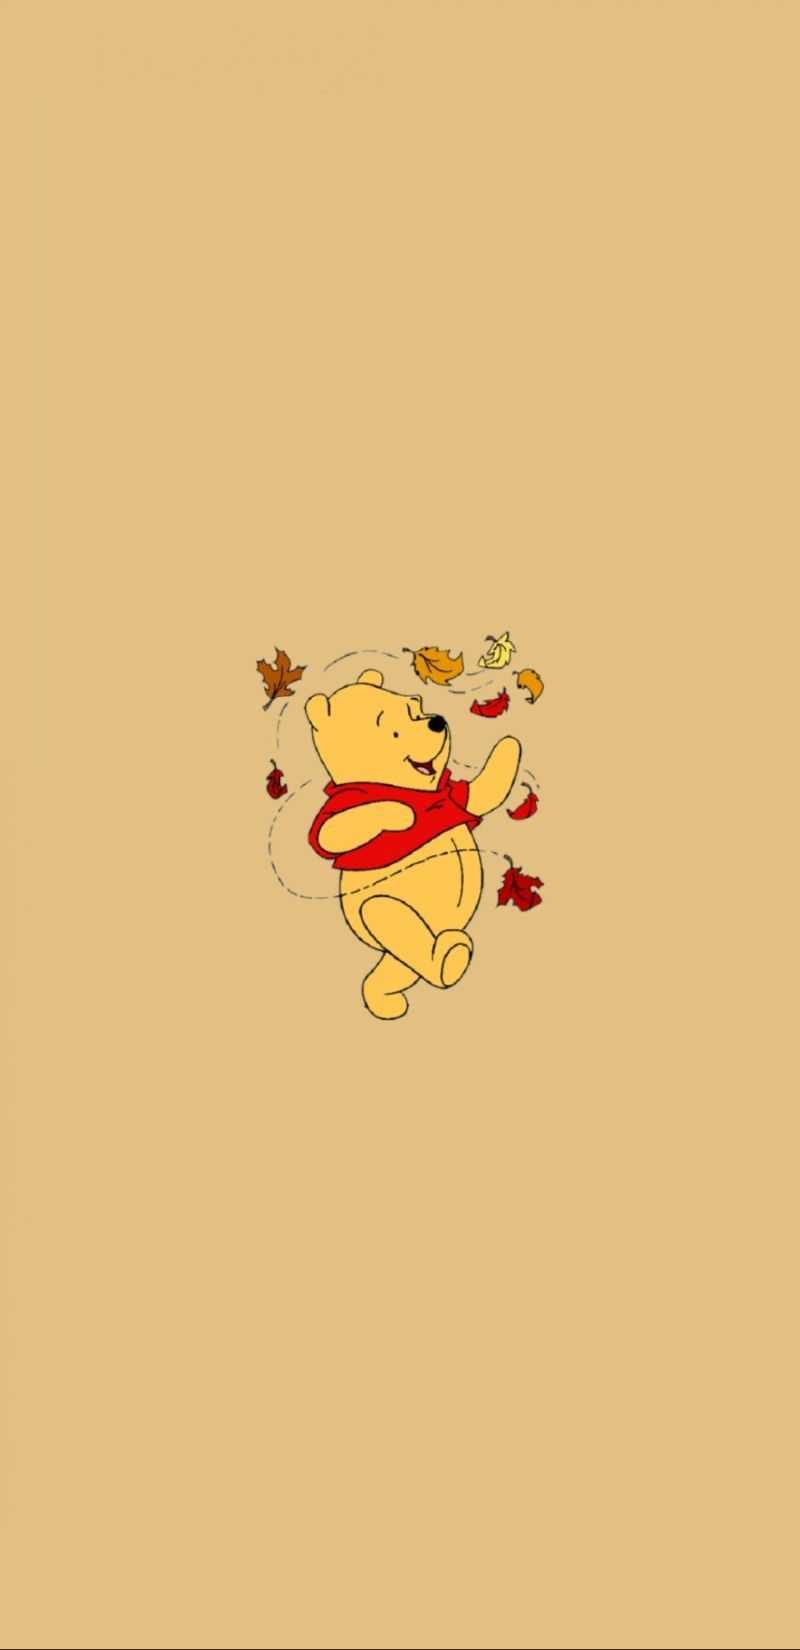 Cute Winnie The Pooh Wallpapers Sale Price, Save 49% | jlcatj.gob.mx